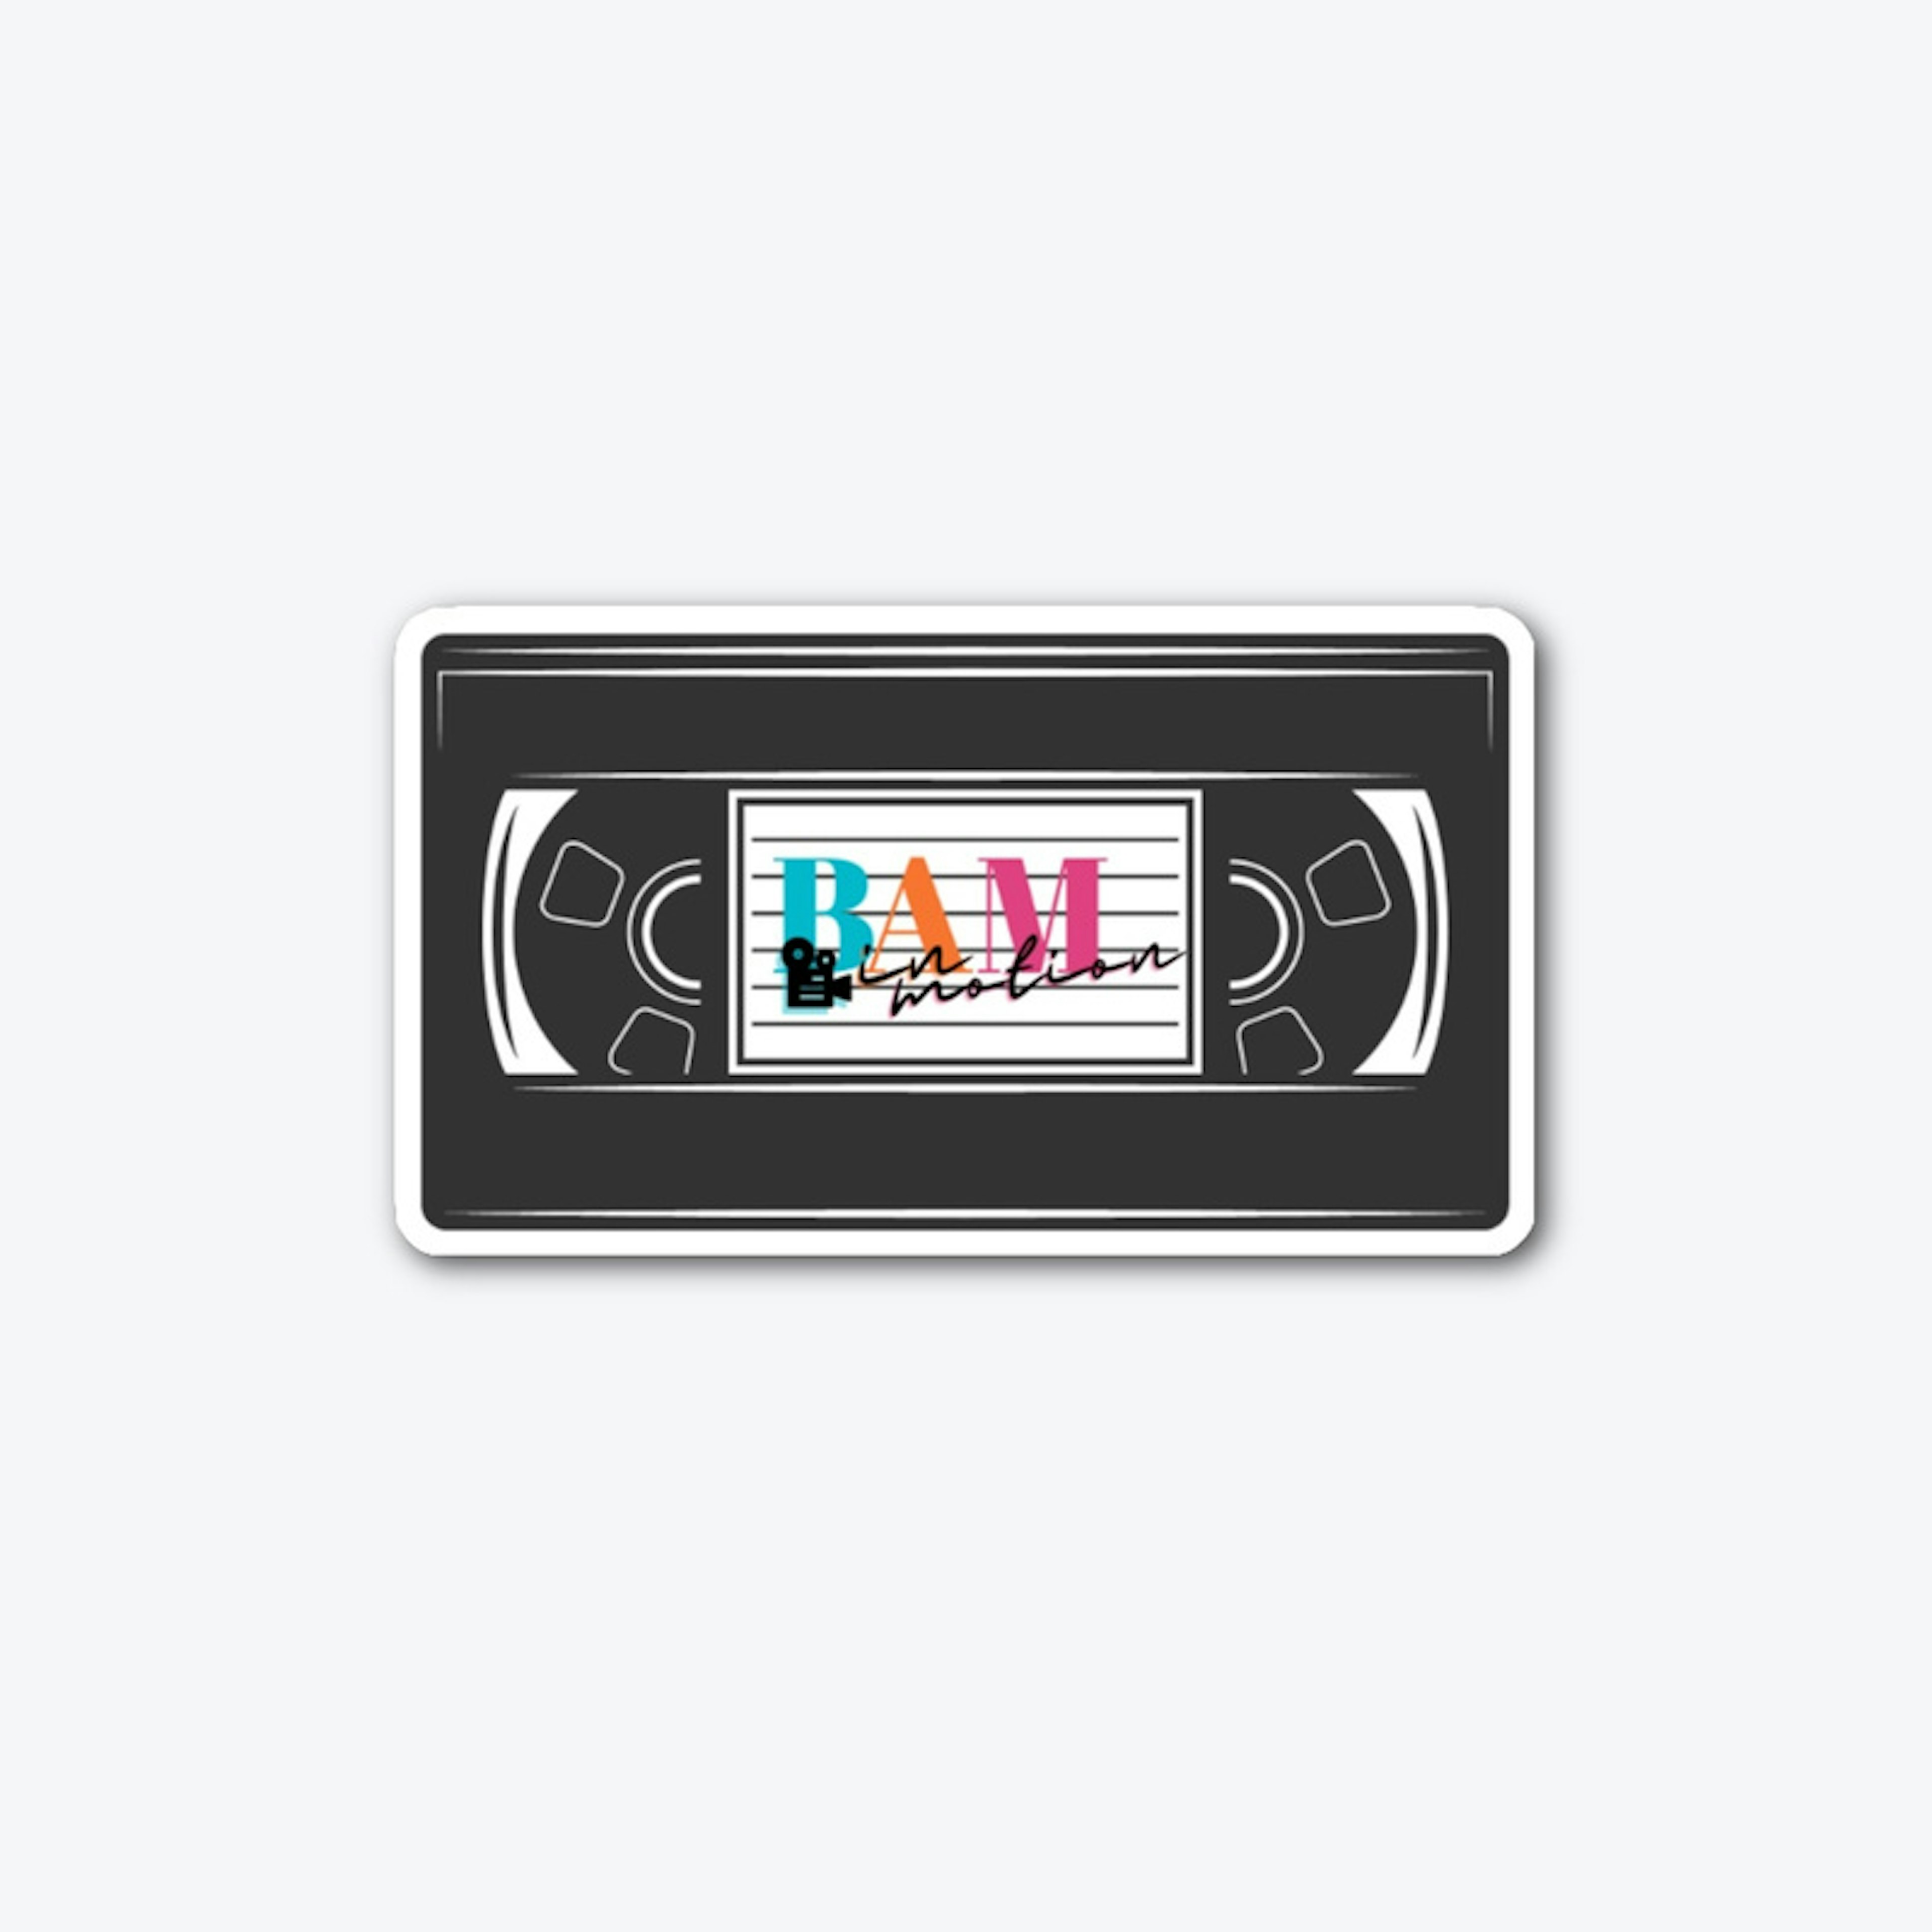 BAM VHS Tape Sticker